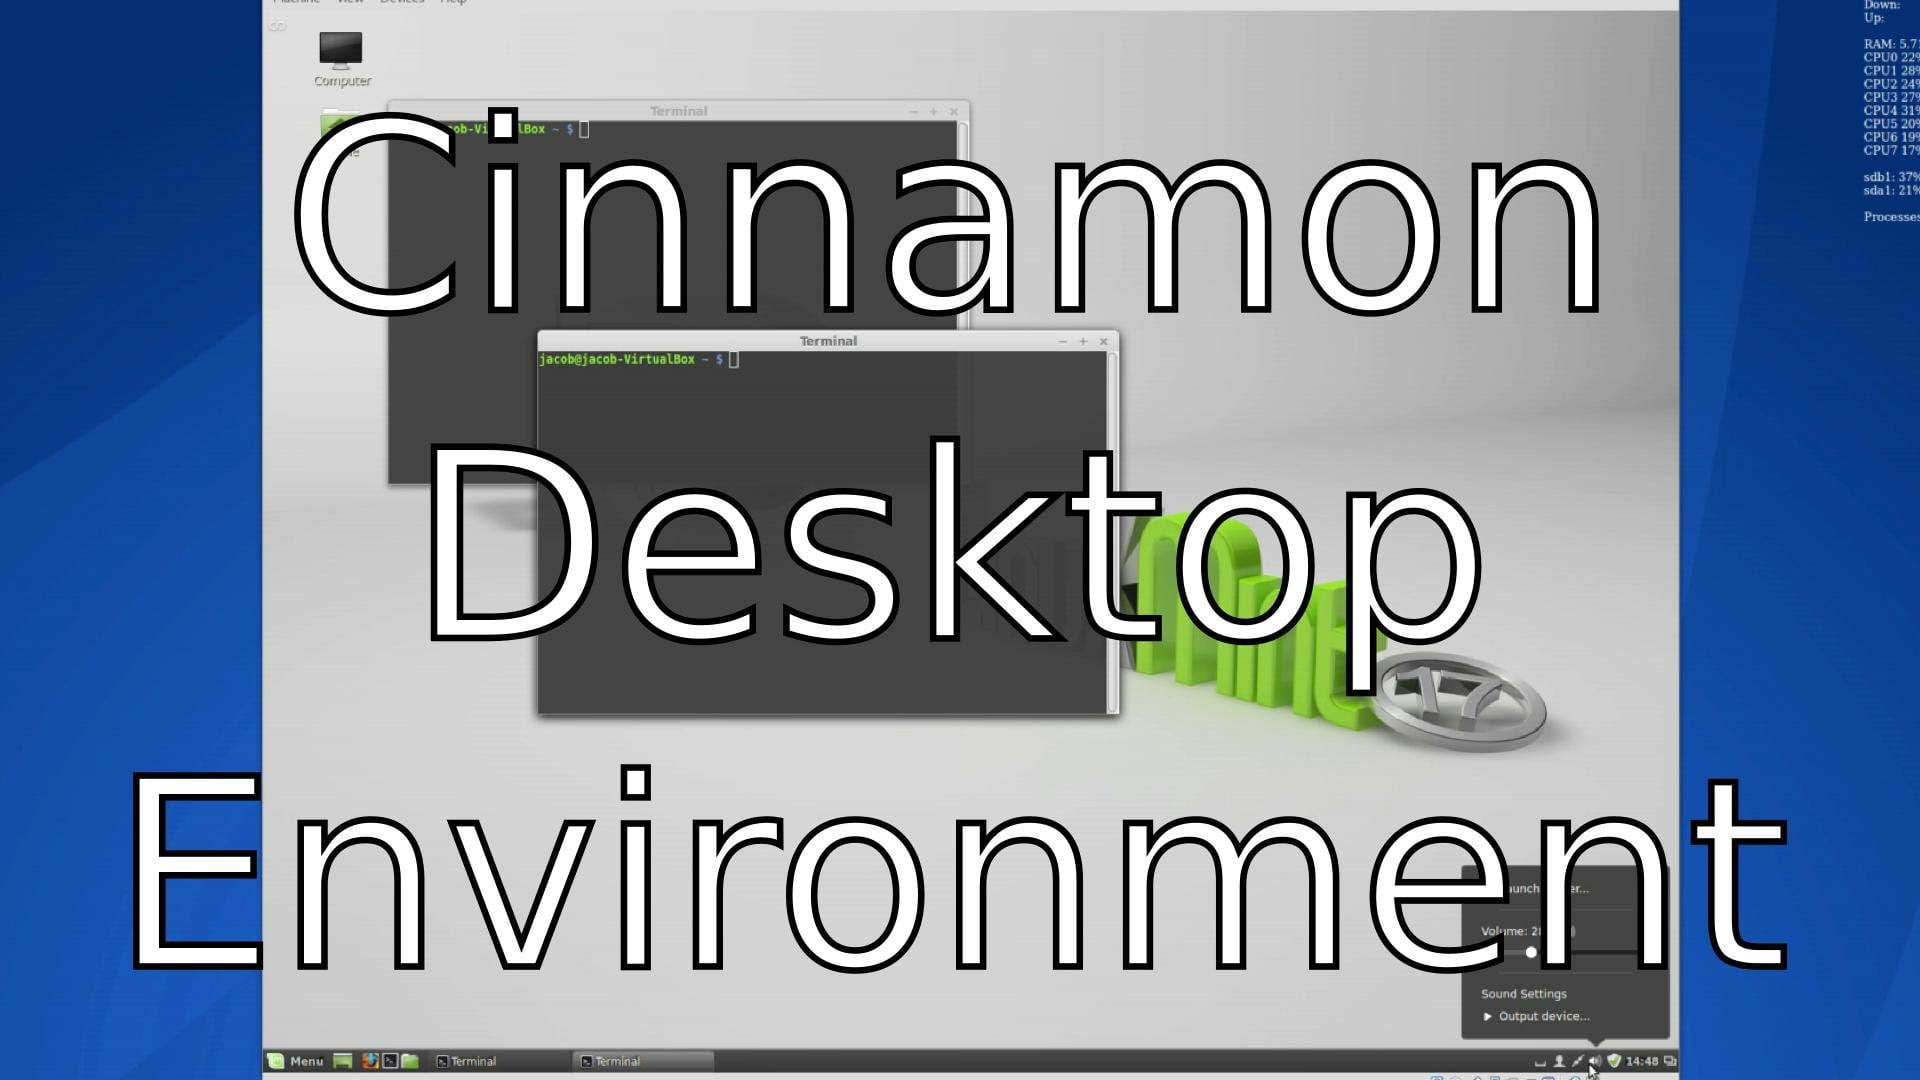 Cinnamon - Linux Desktop Environments